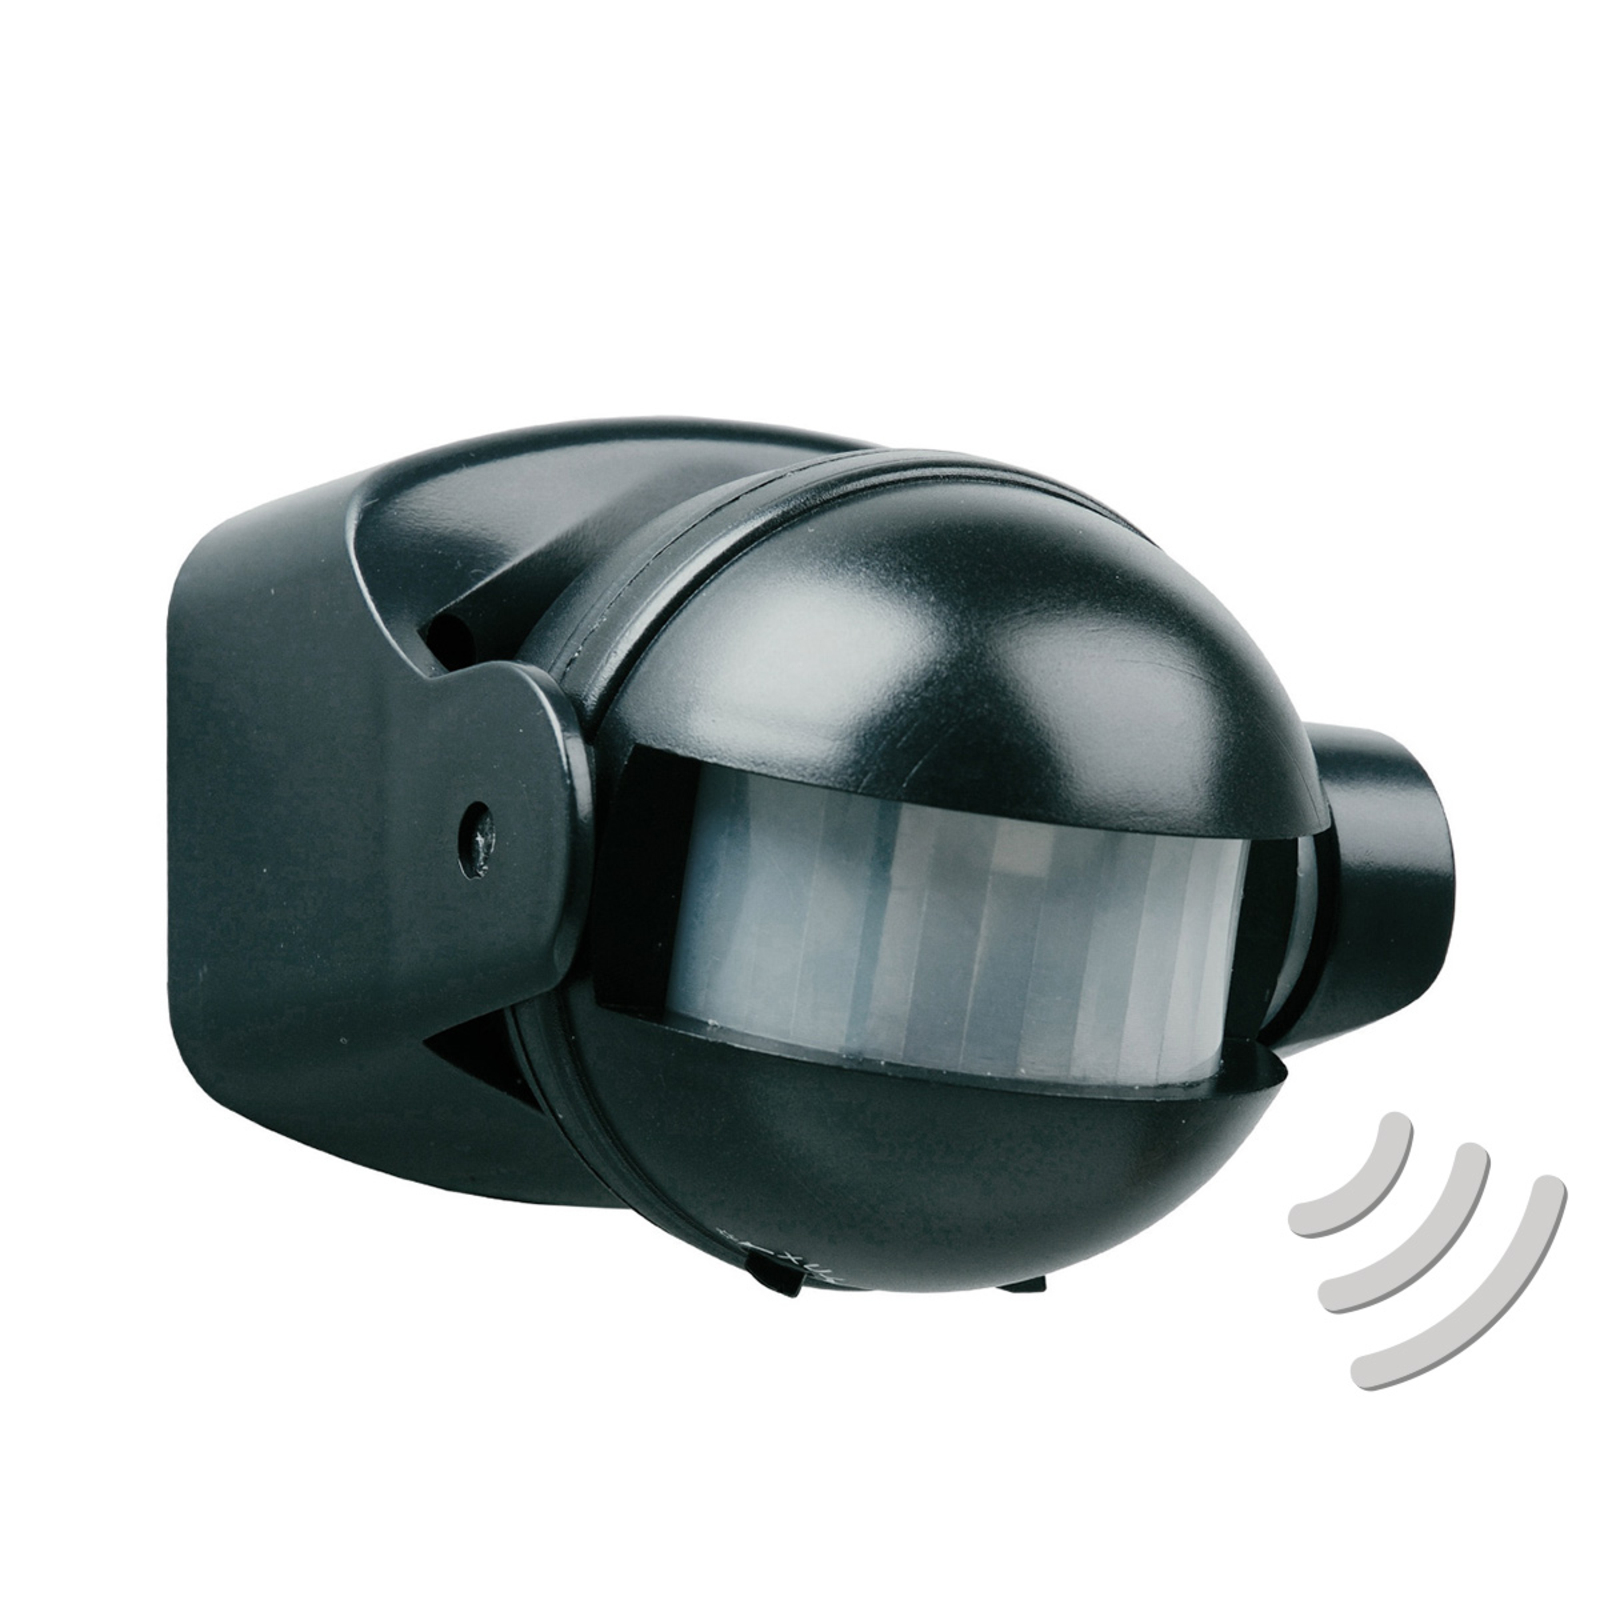 Snorre motion detector in black